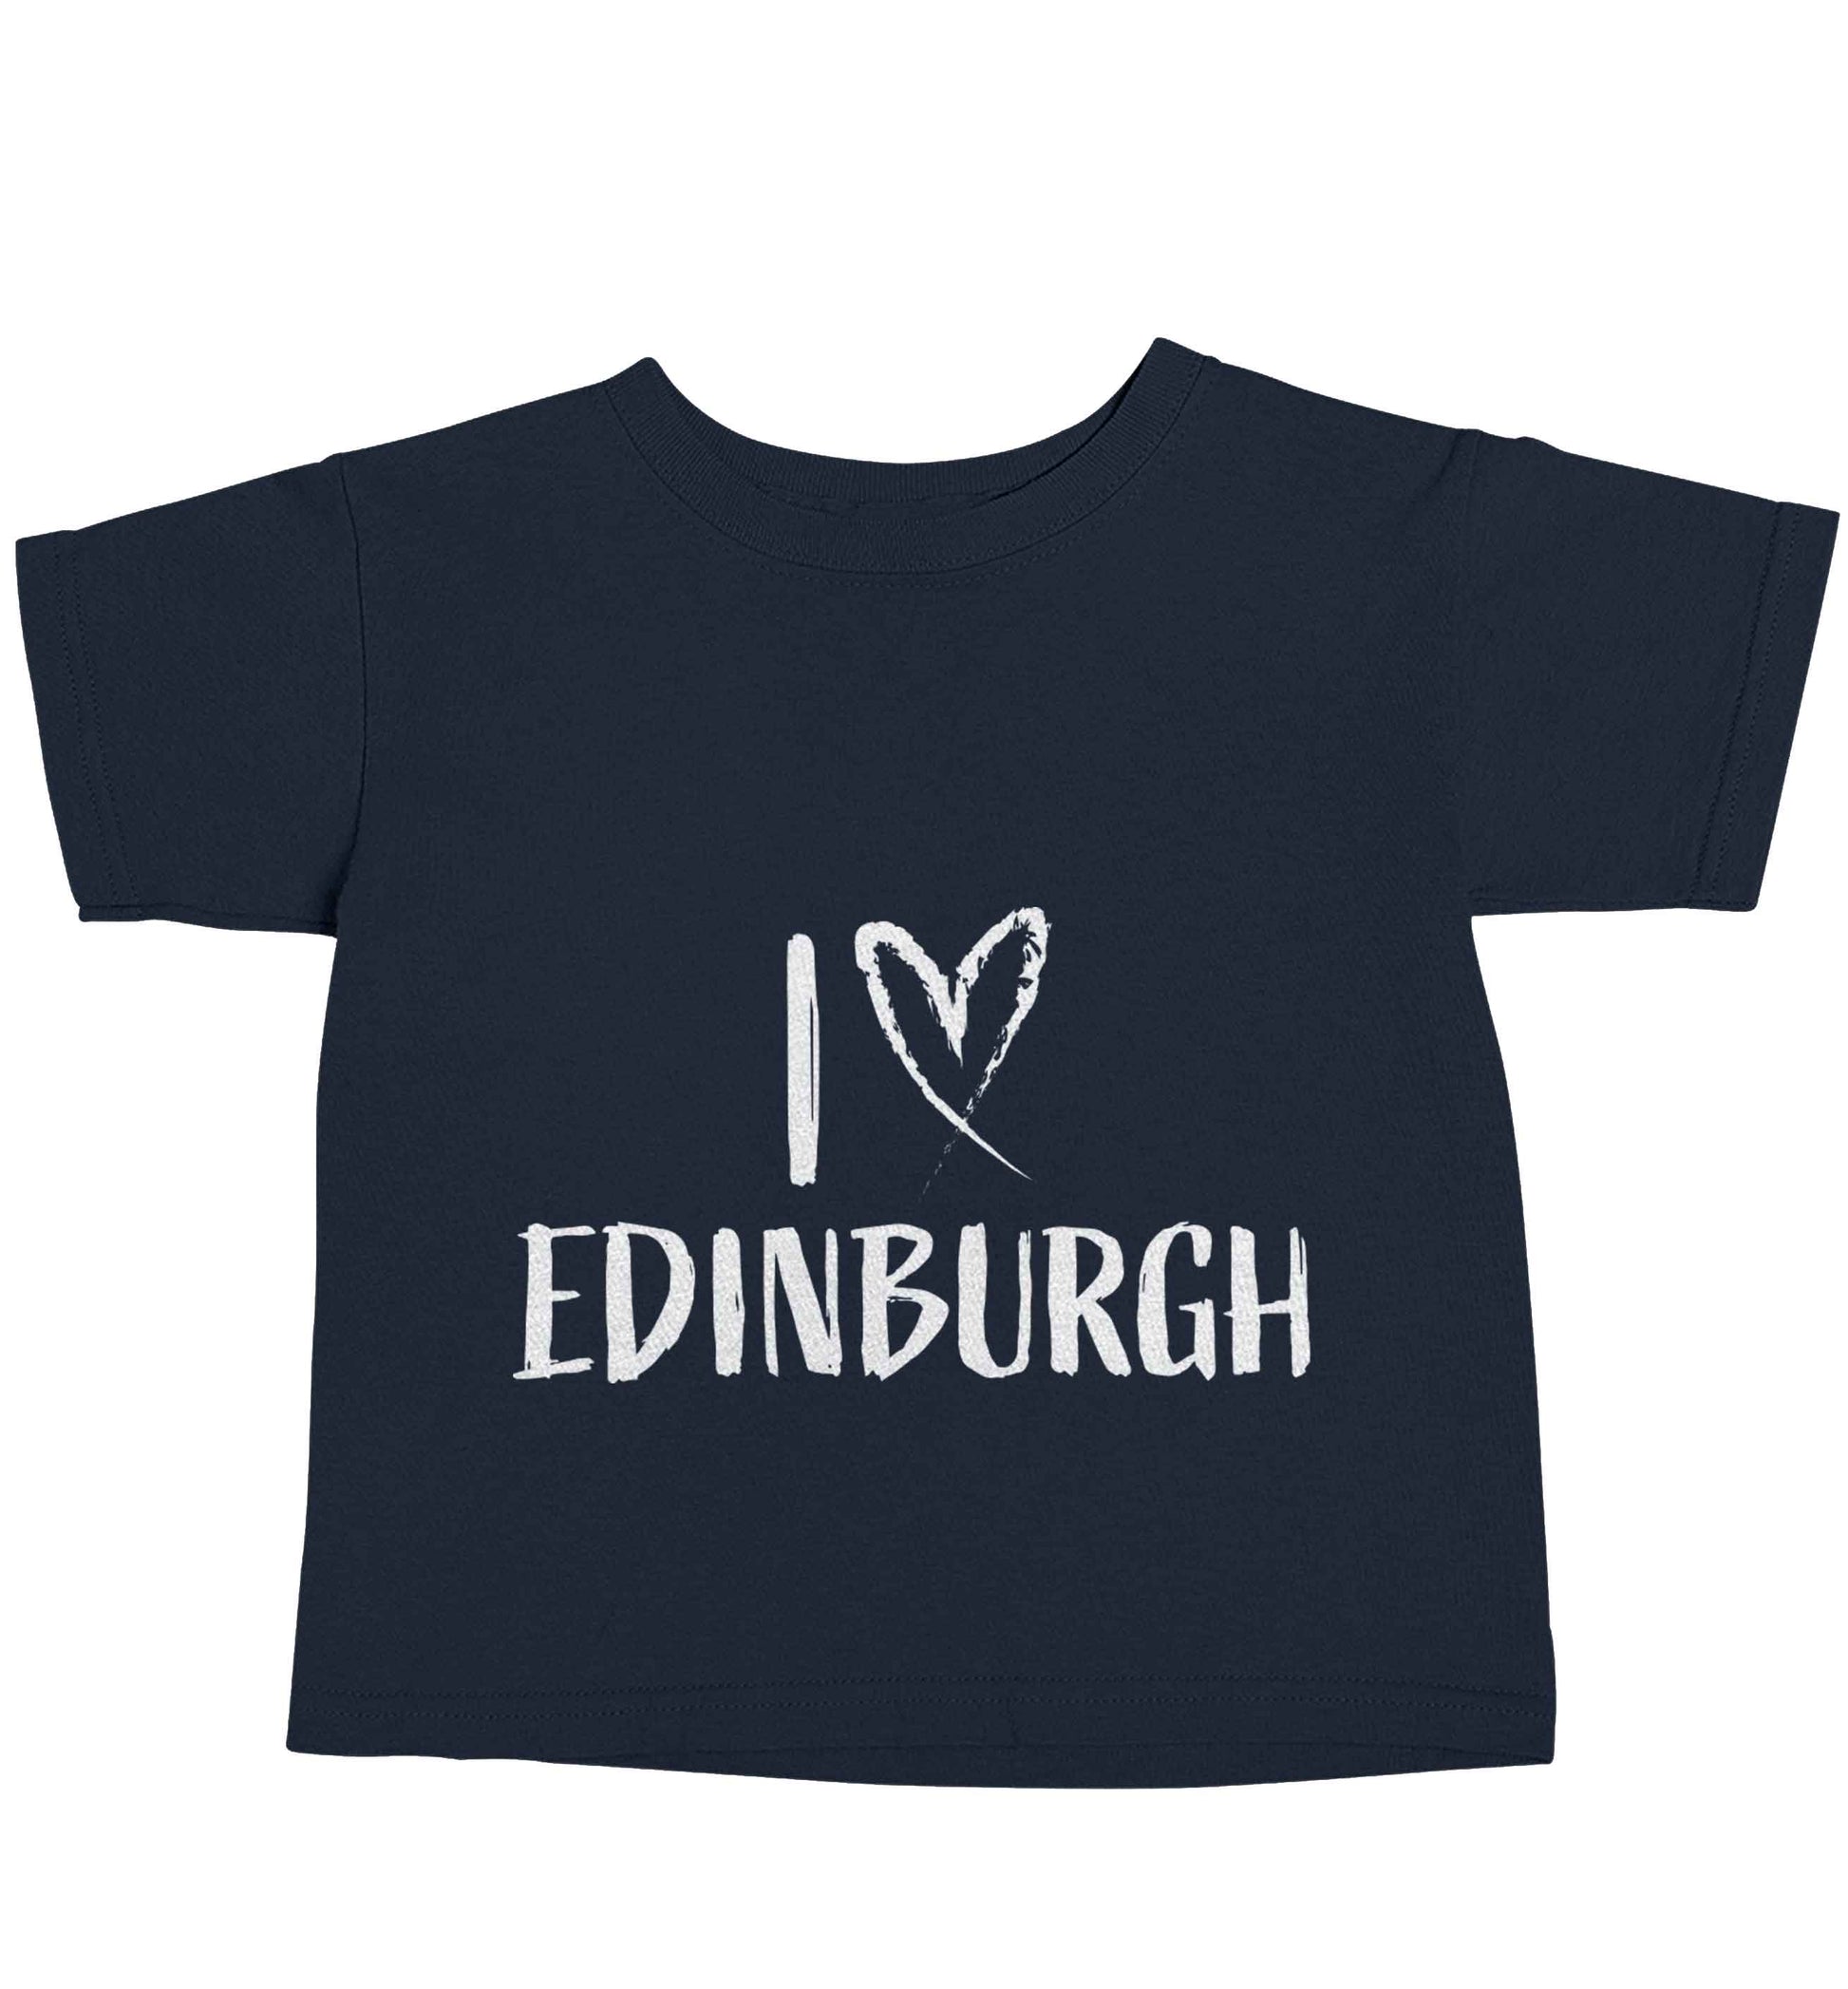 I love Edinburgh navy baby toddler Tshirt 2 Years